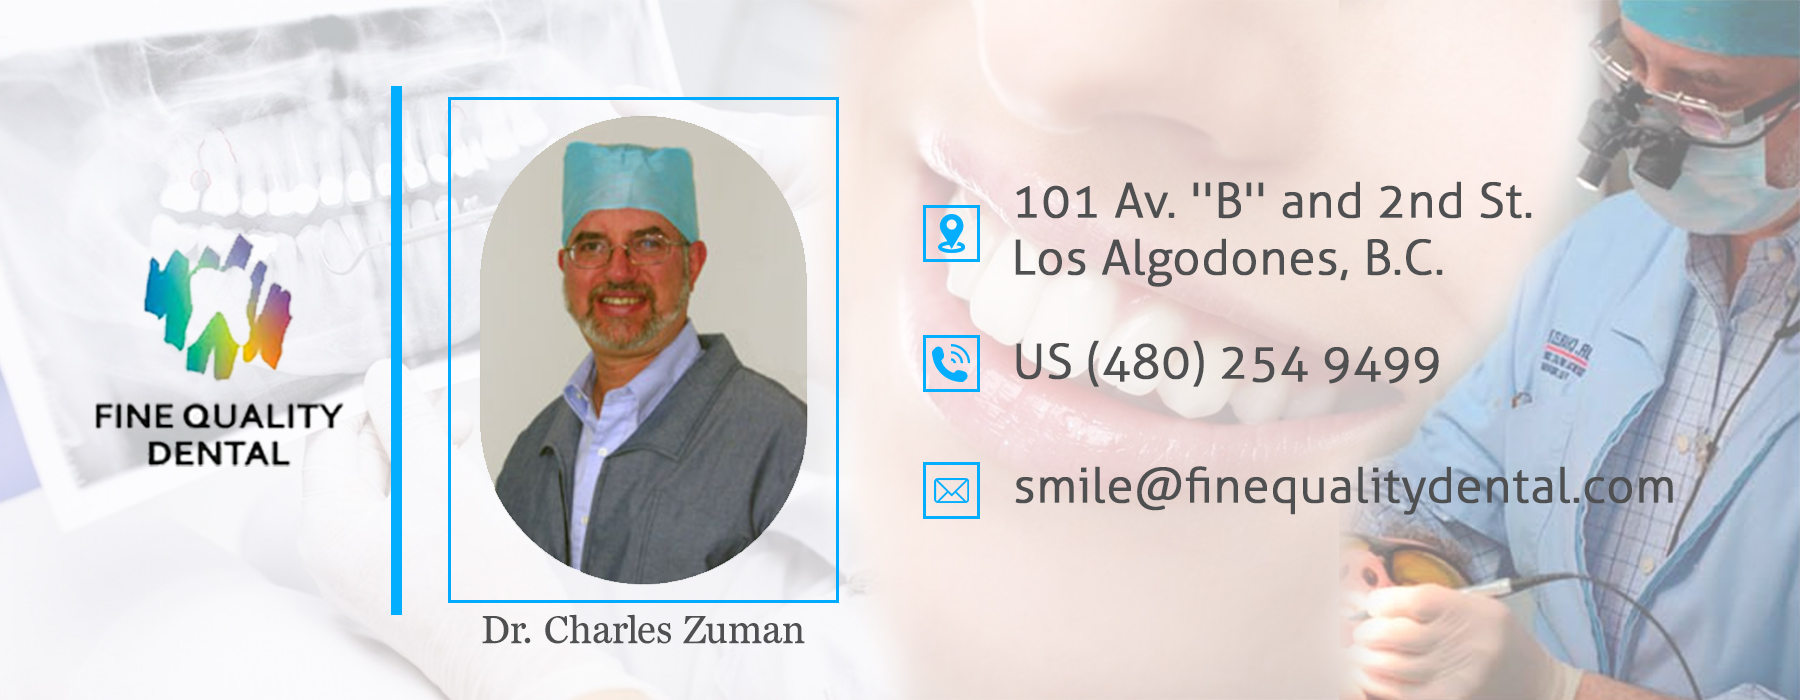  Fine Quality Dental Dr. Zuman